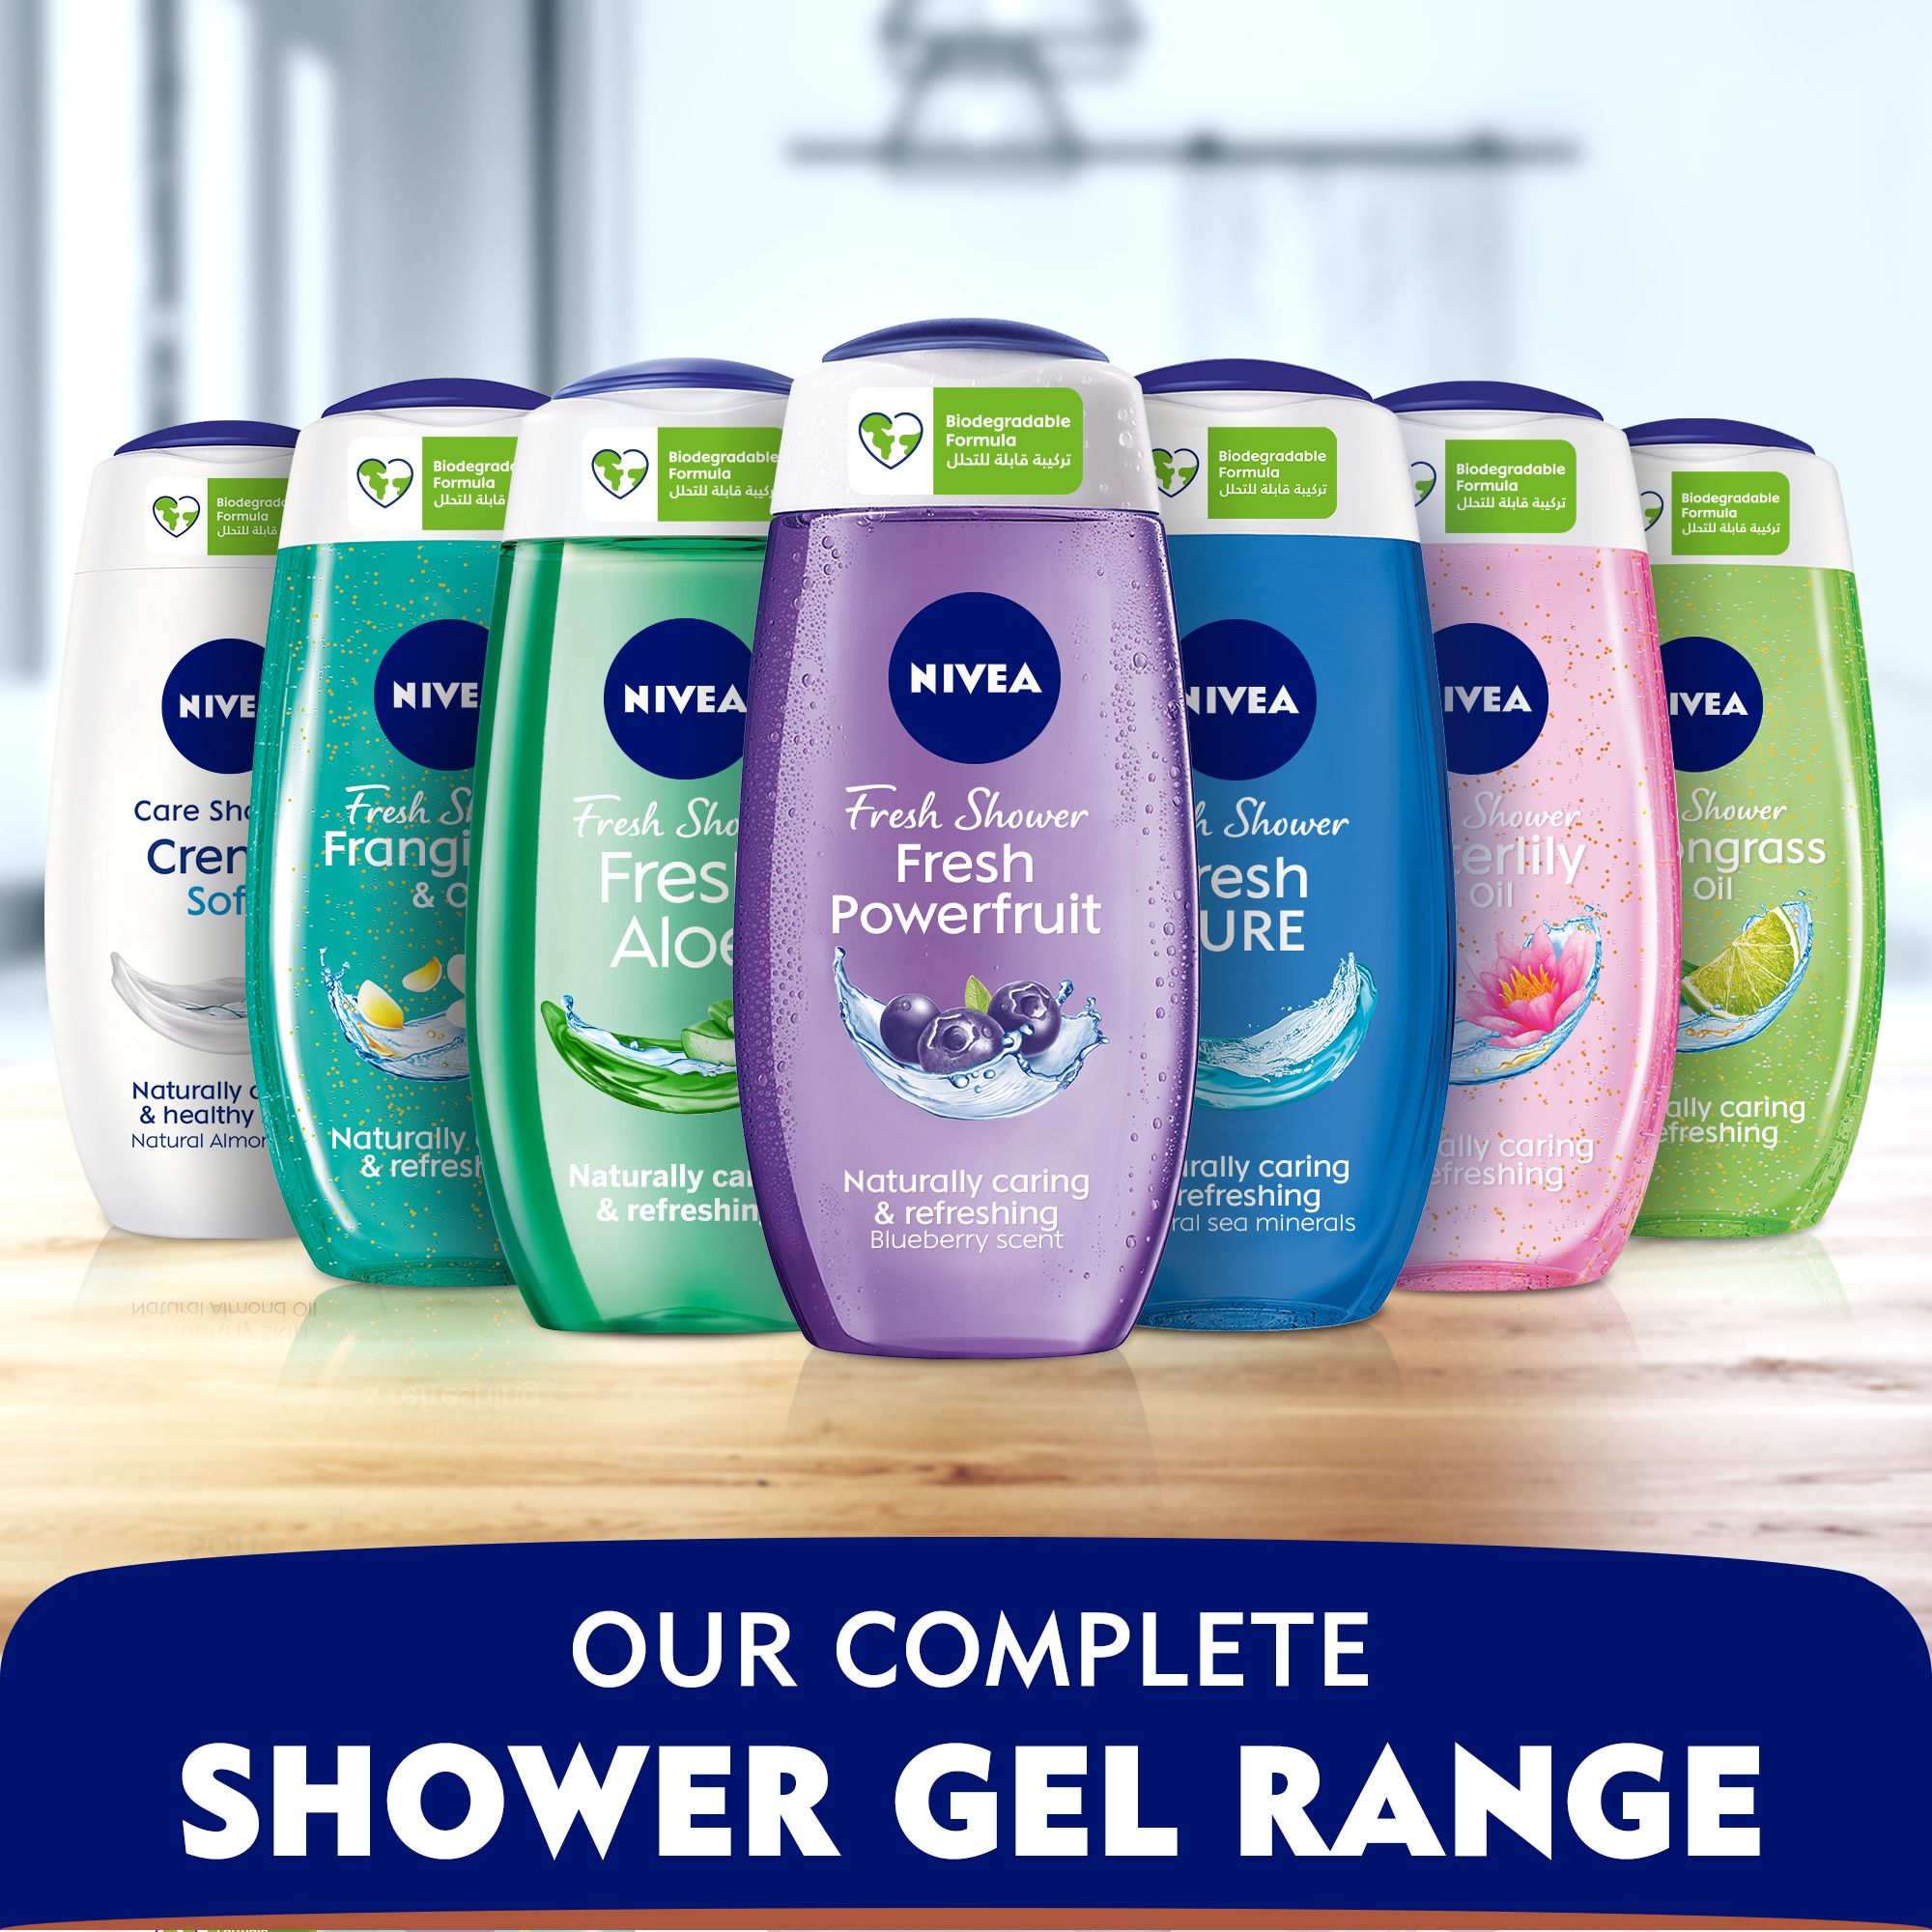 Shower Gel Body Wash, Frangipani & Oil Caring Oil Pearls Frangipani Scent, 250ml